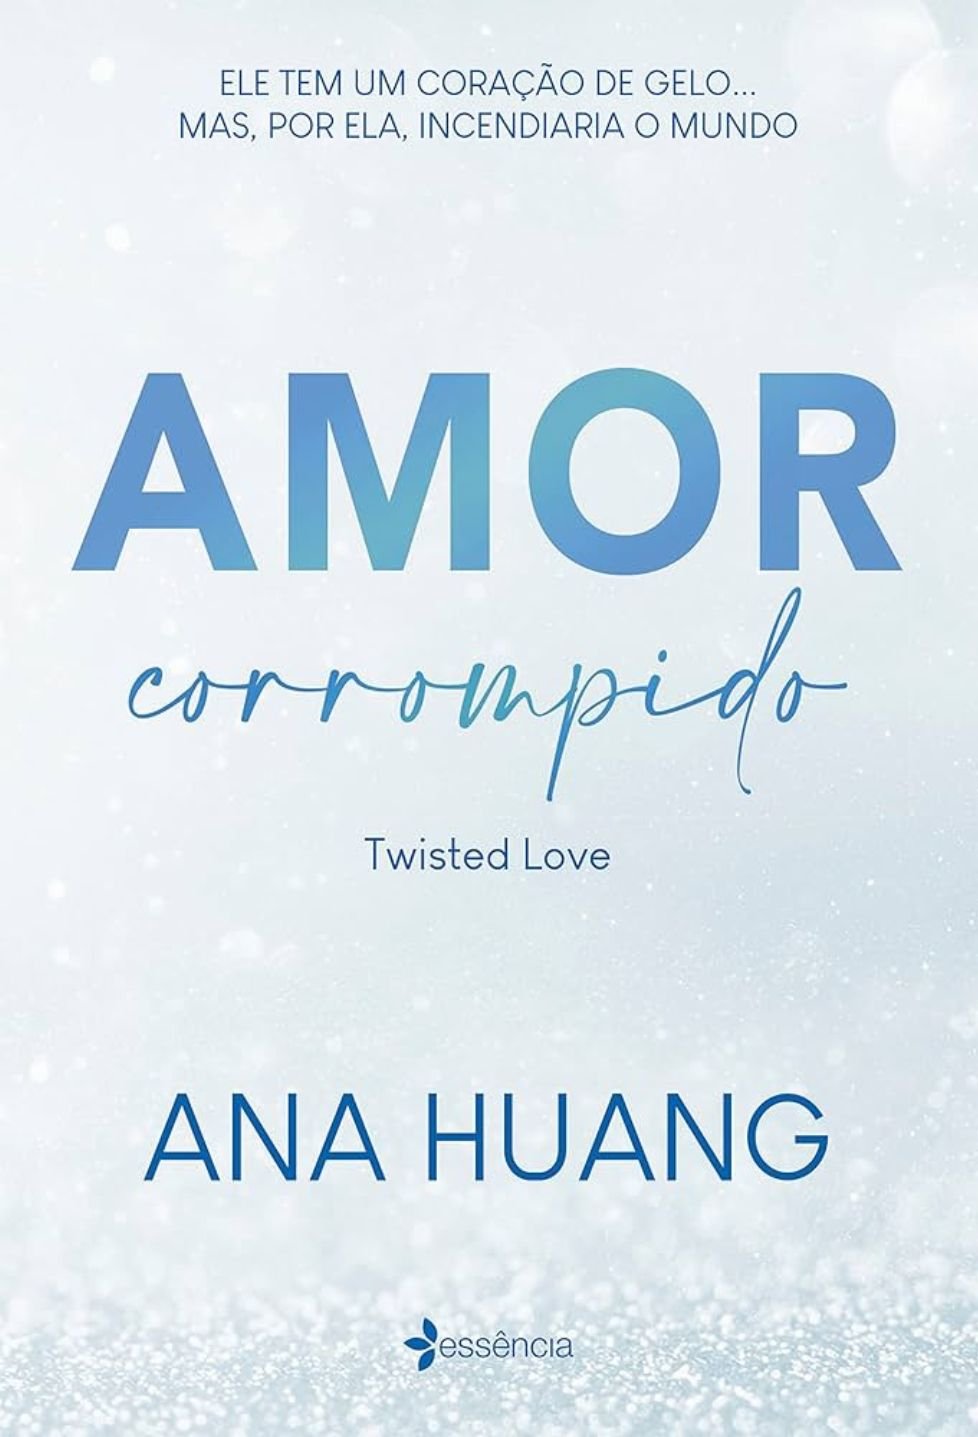 amor corrompido twisted love Ana Huang